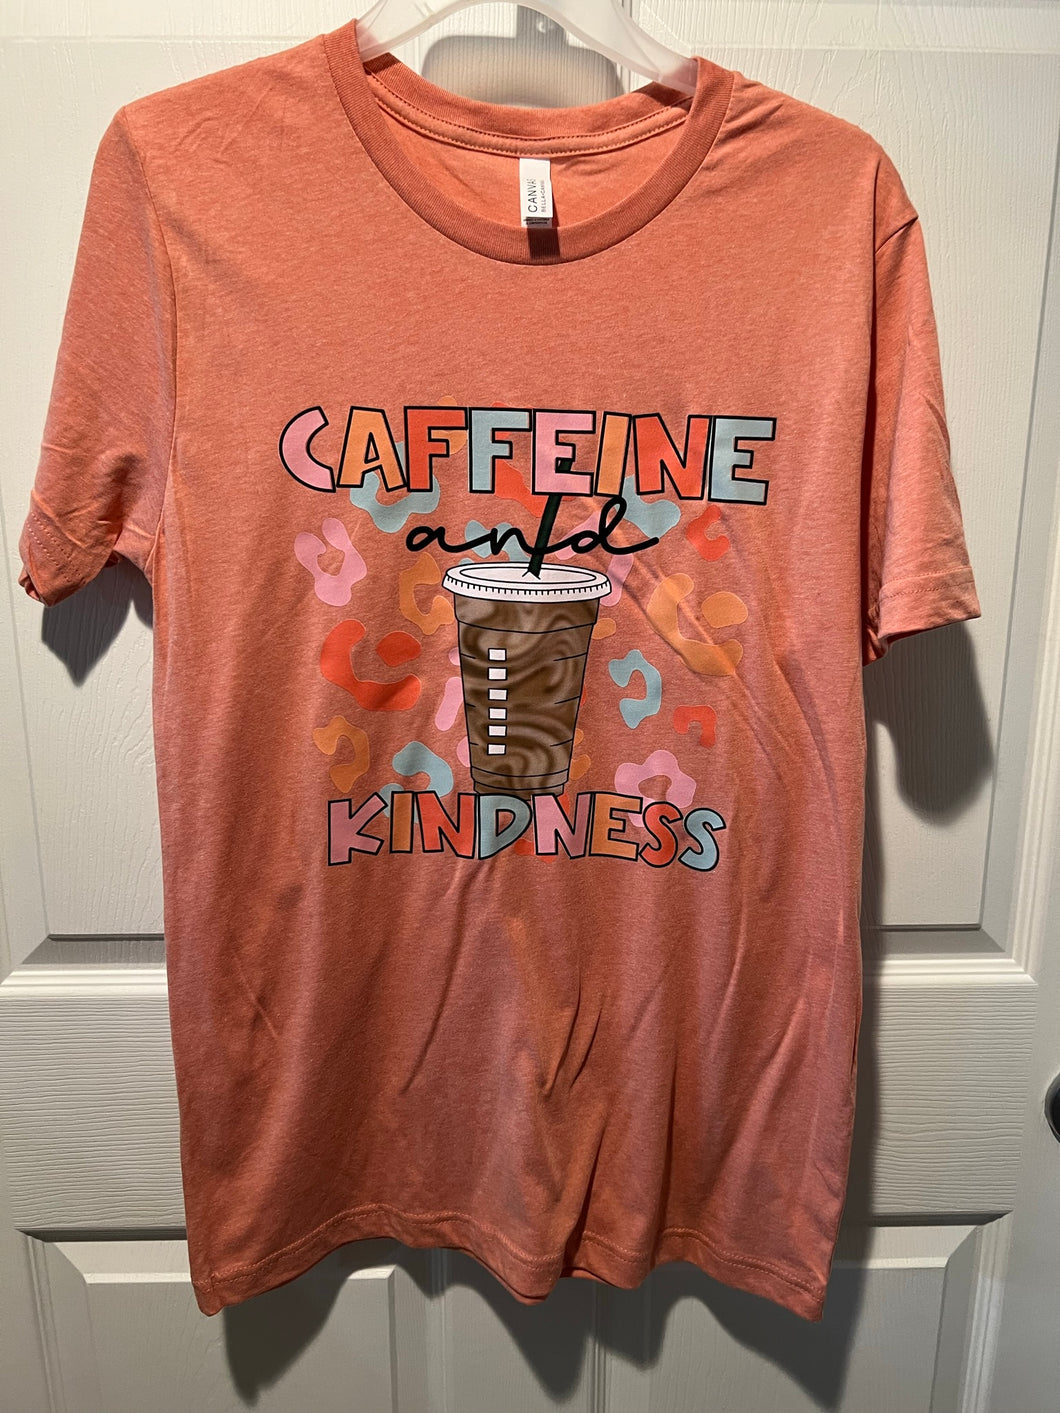 Caffeine & Kindness Shirt - Size Medium